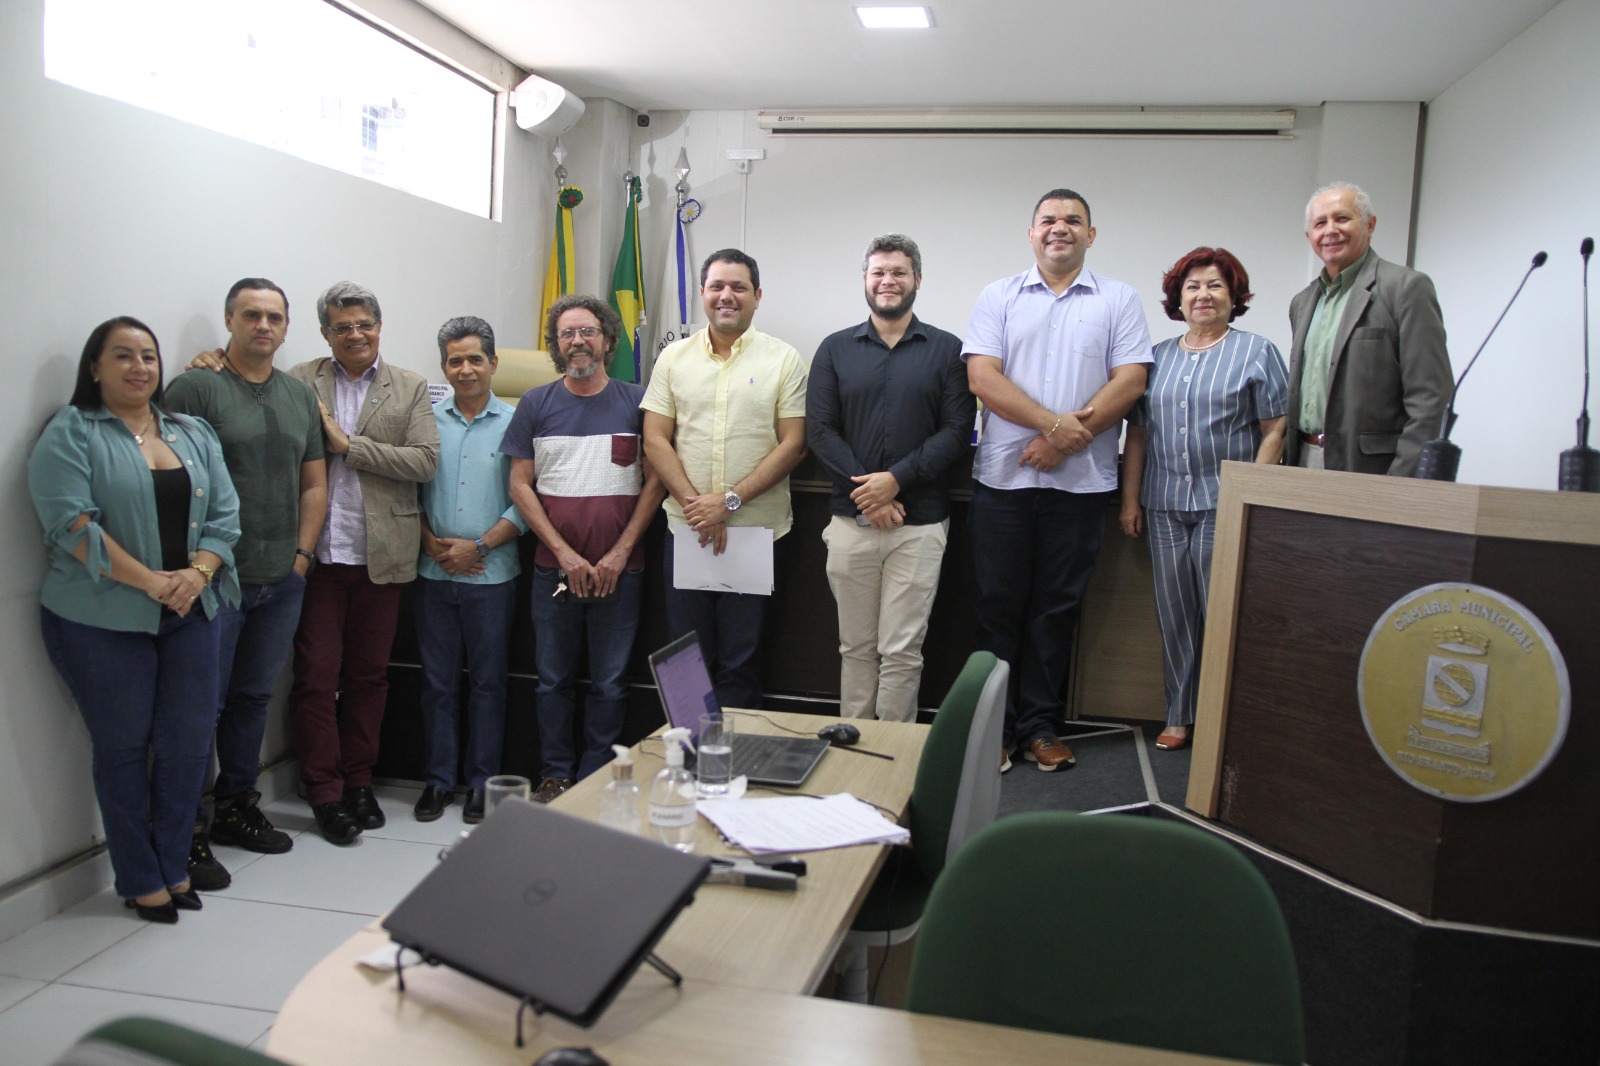 Músicos, poetas e historiadores debatem o concurso do 1º hino do município de Rio Branco